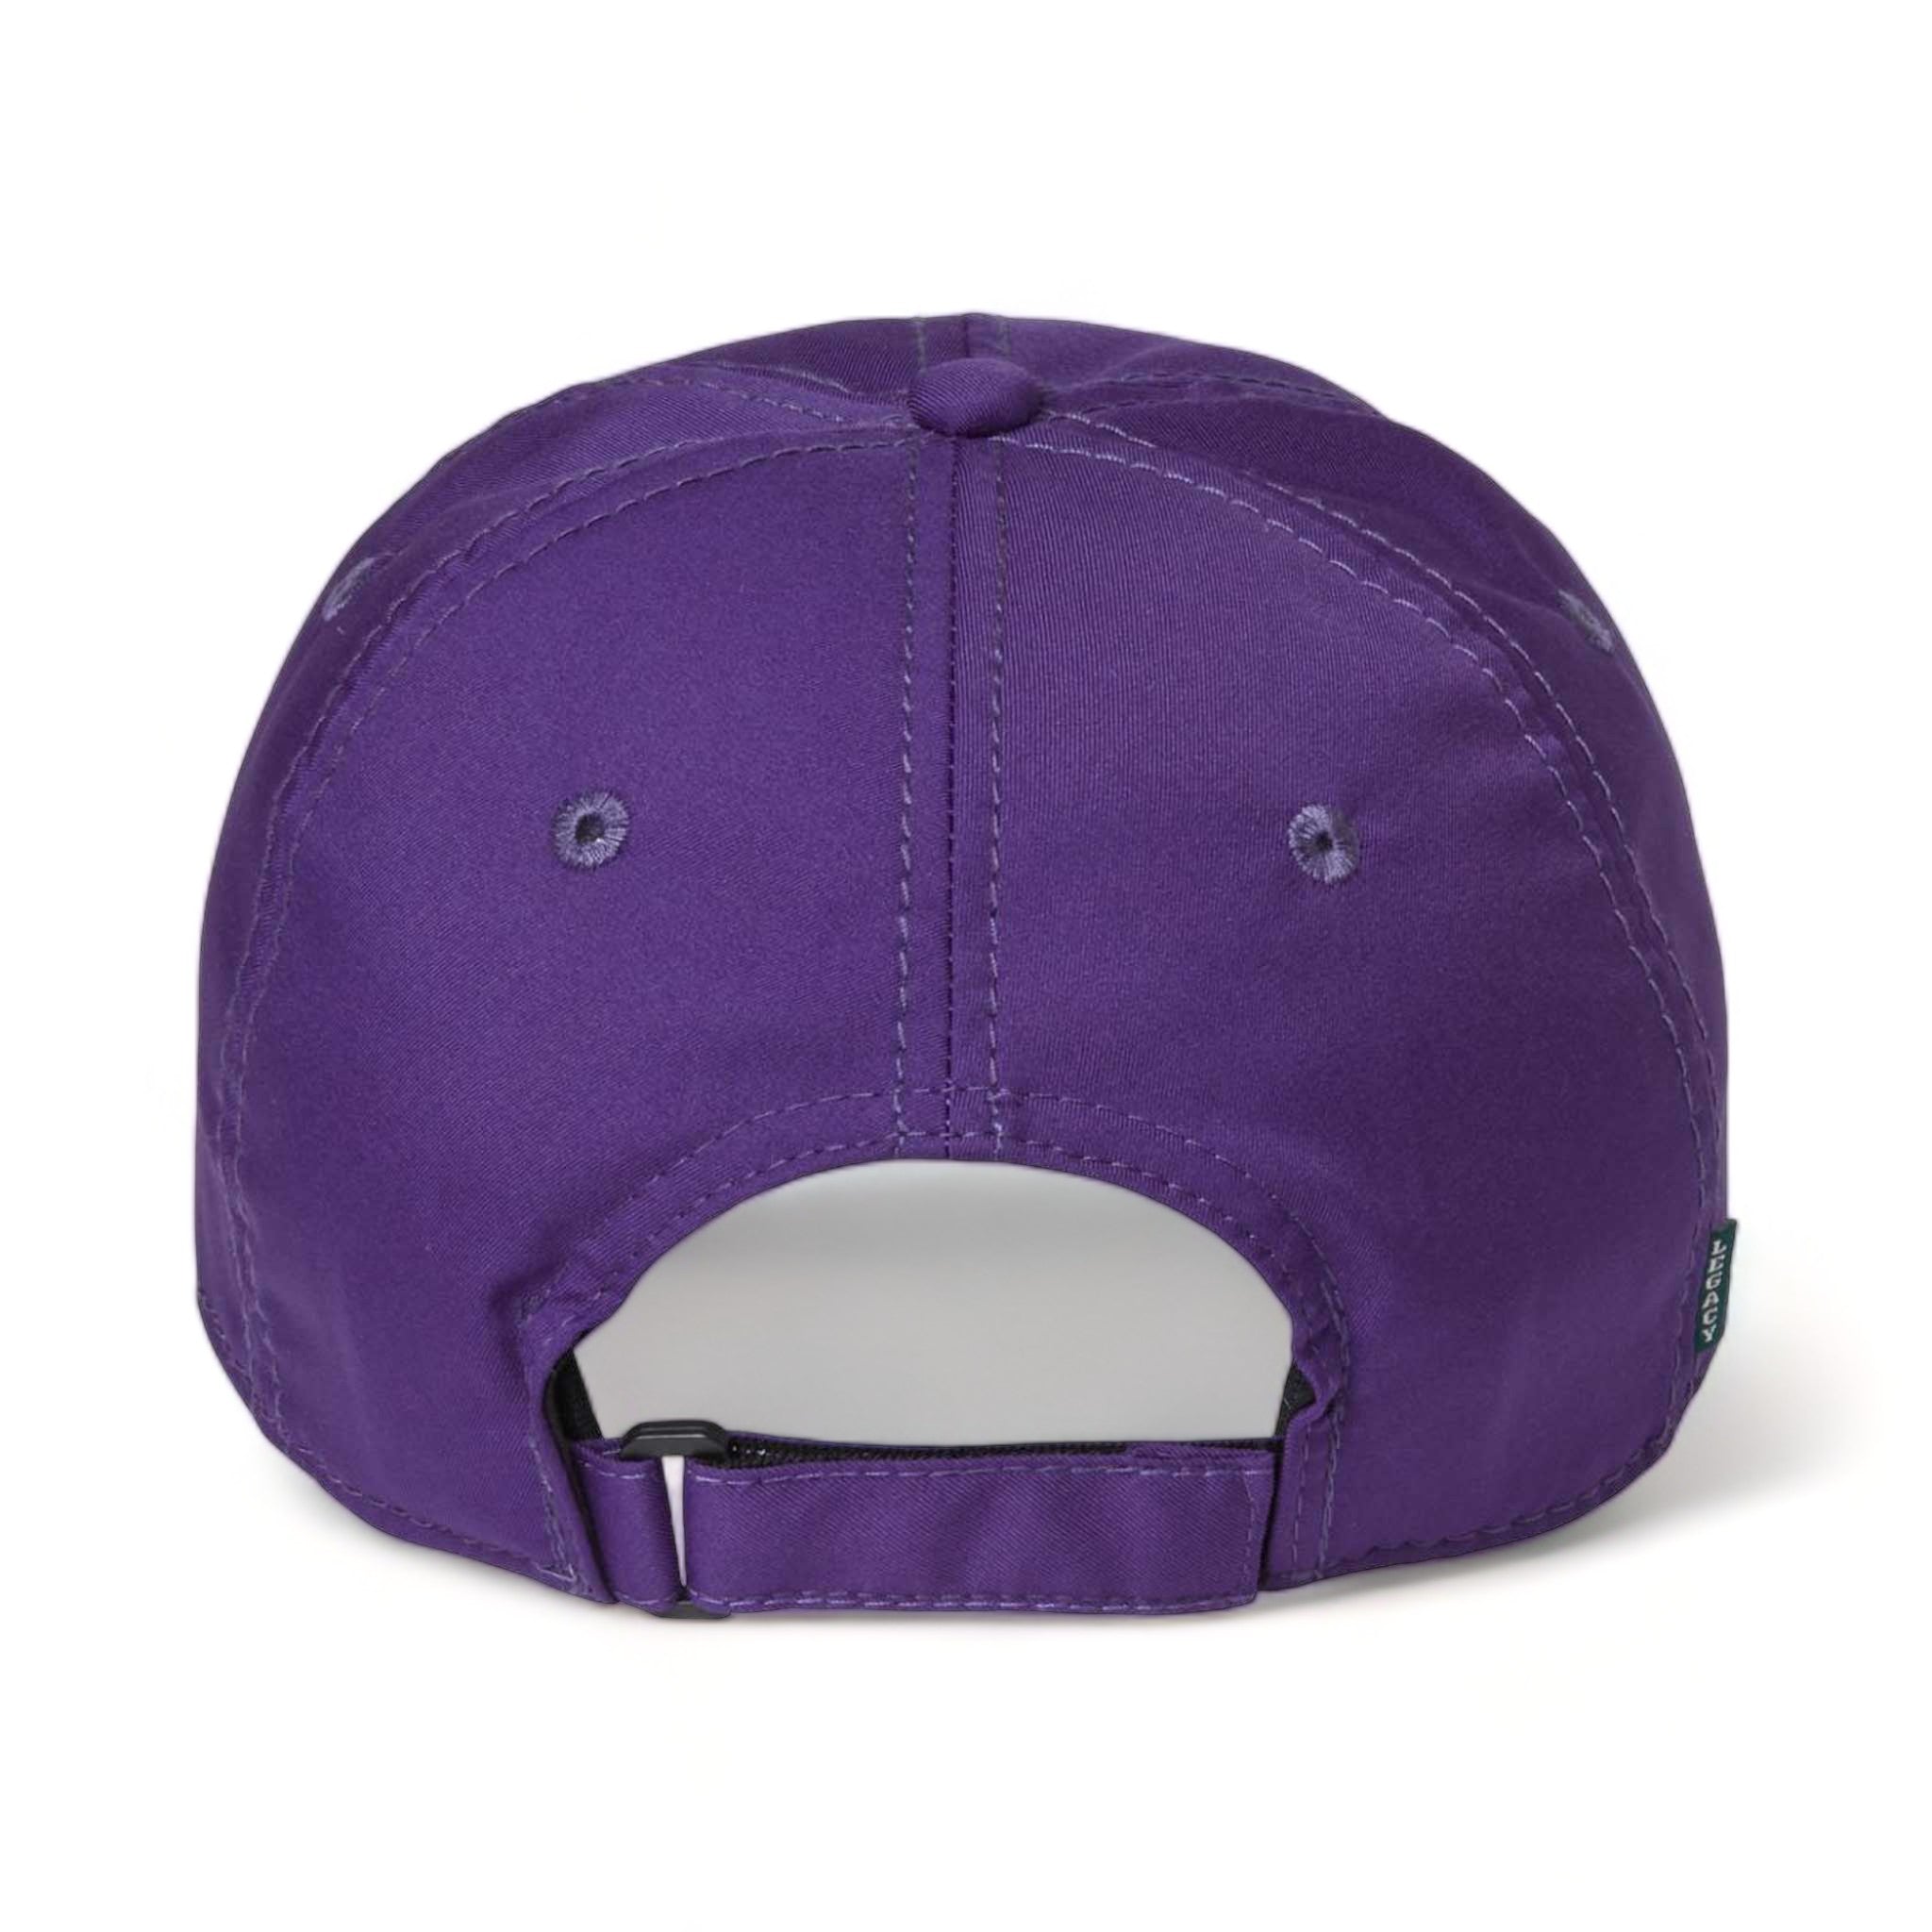 Back view of LEGACY CFA custom hat in purple